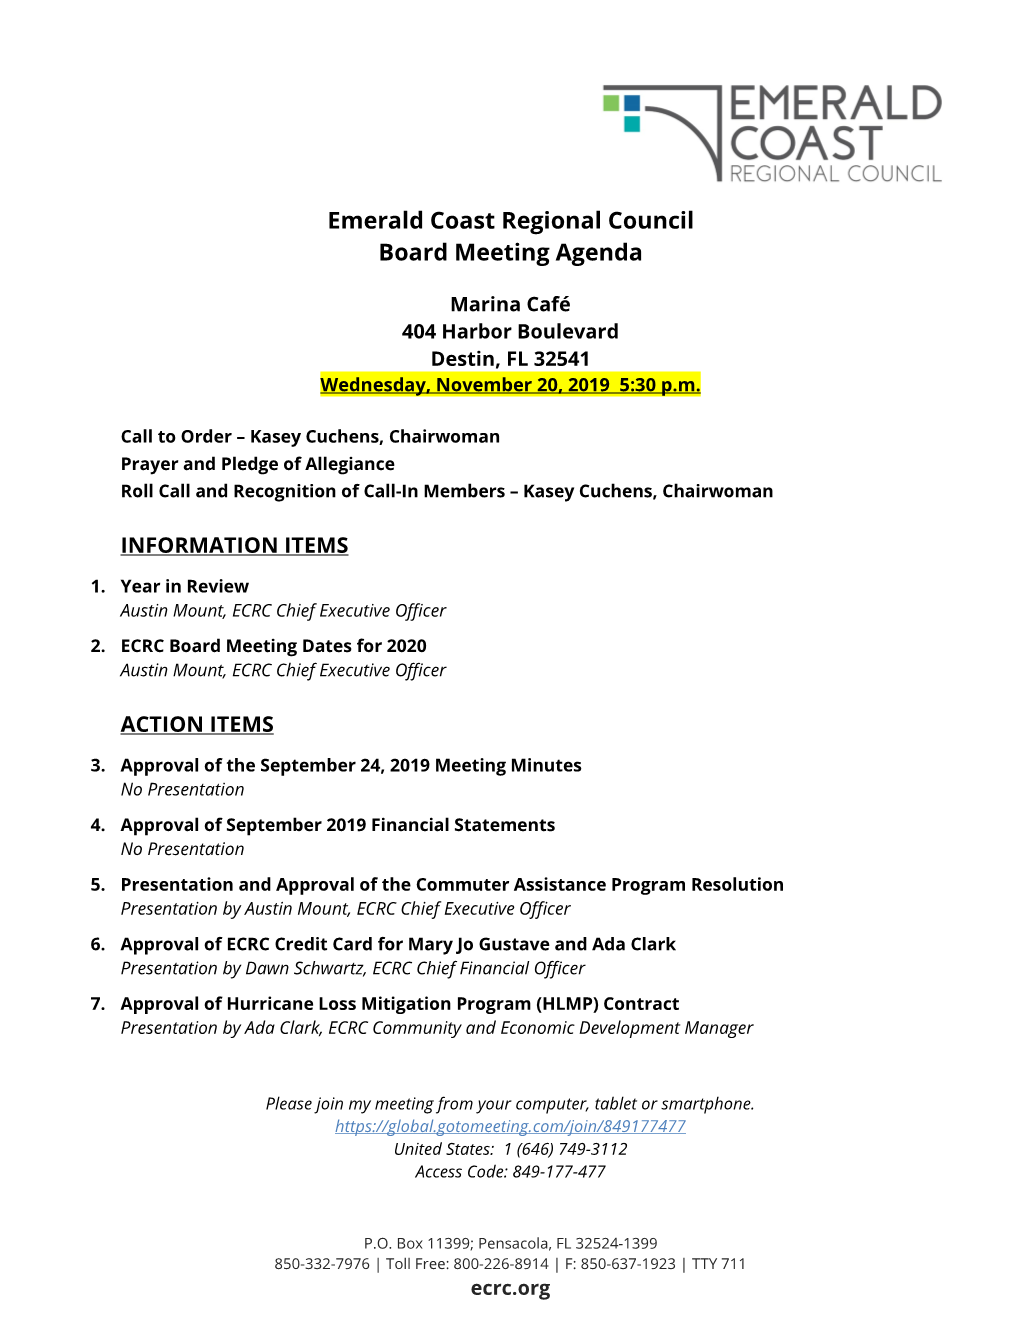 Emerald Coast Regional Council Board Meeting Agenda